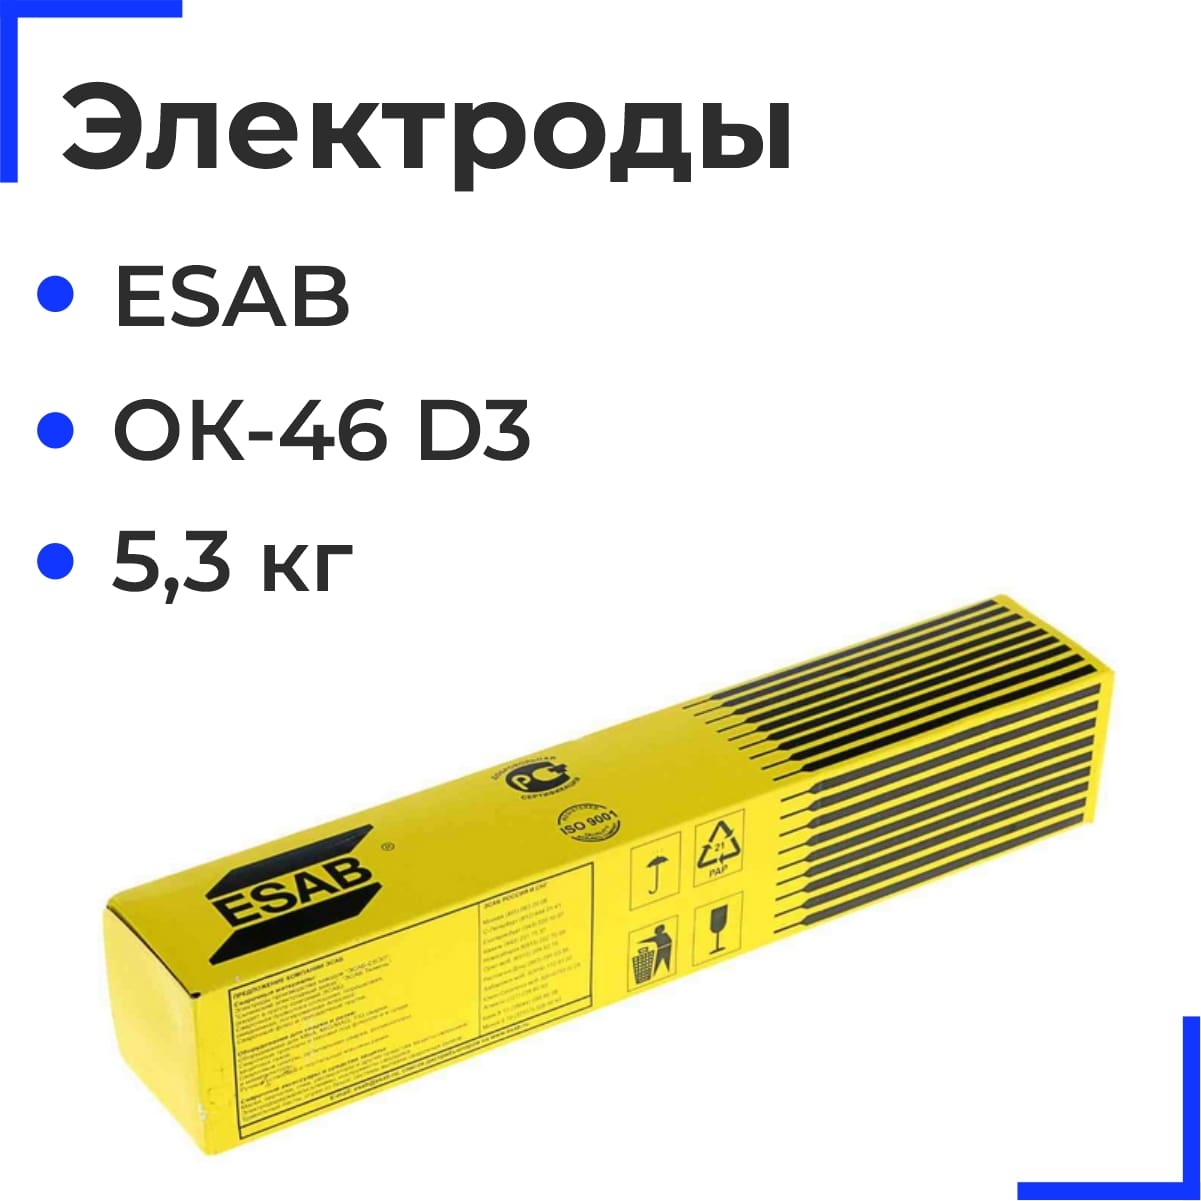 ОК-46 D3 Электроды (упак. 5,3 кг)